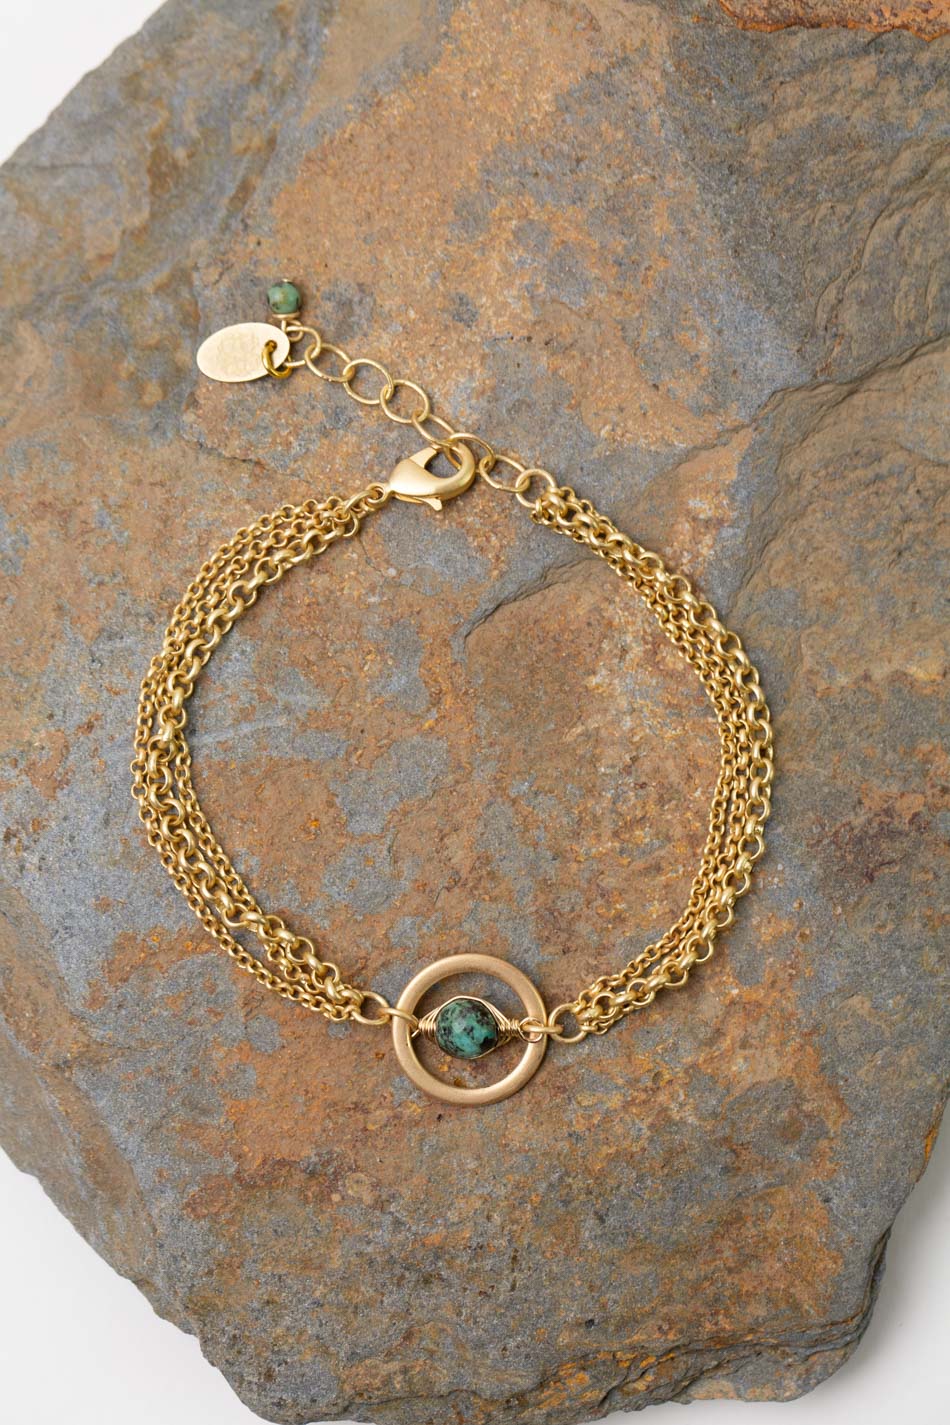 Tranquil Gardens 7.5-8.5" Matte Gold Turquoise Focal Bracelet